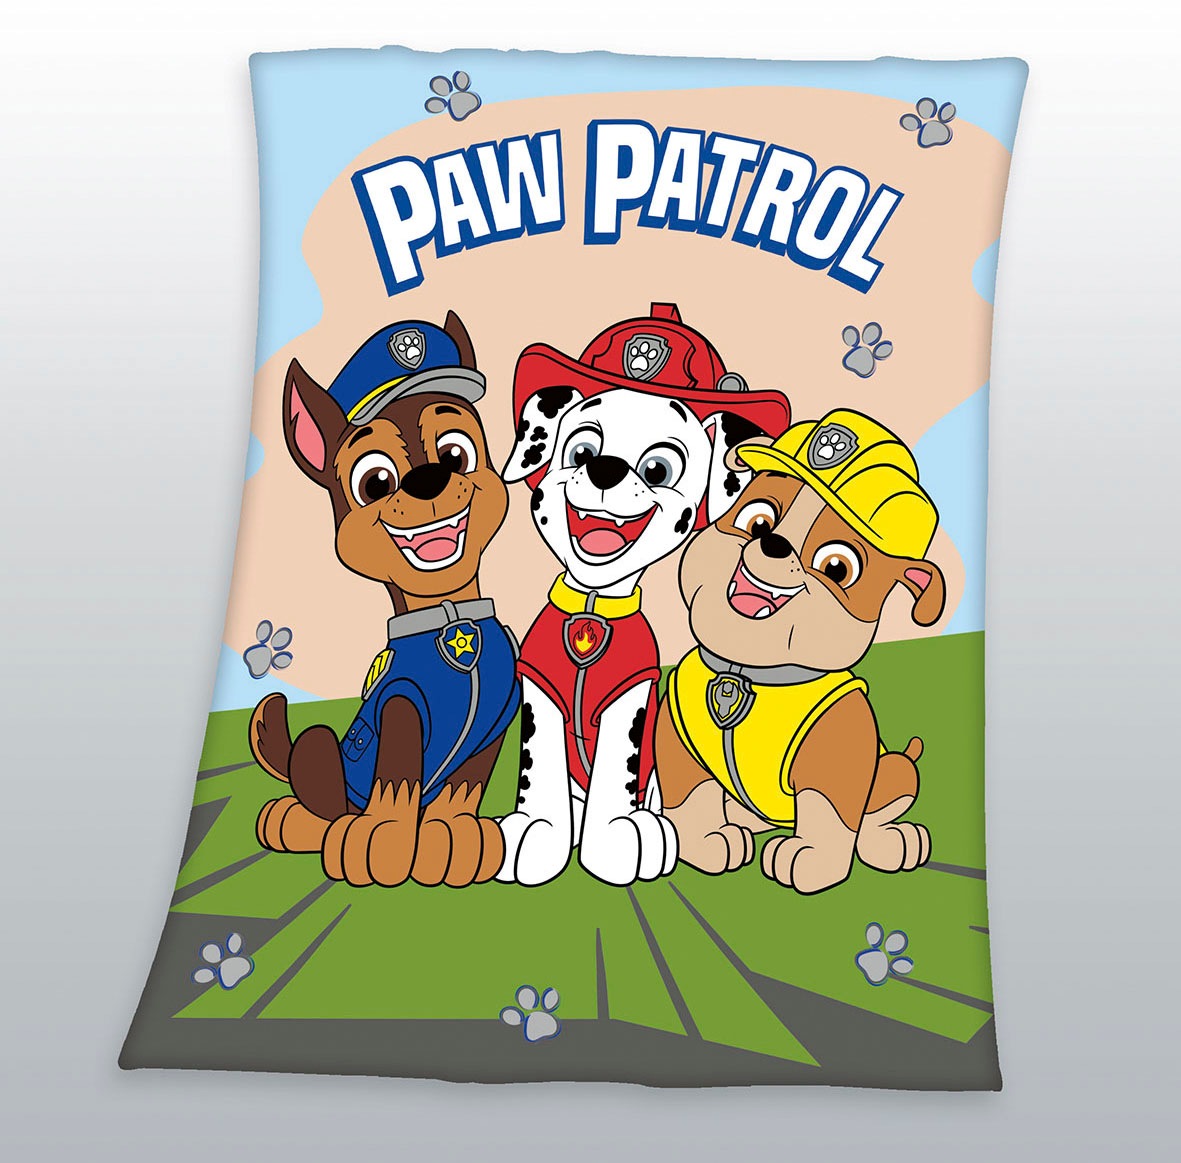 PAW PATROL Kinderdecke "Paw Patrol", mit tollem Paw Patrol Motiv